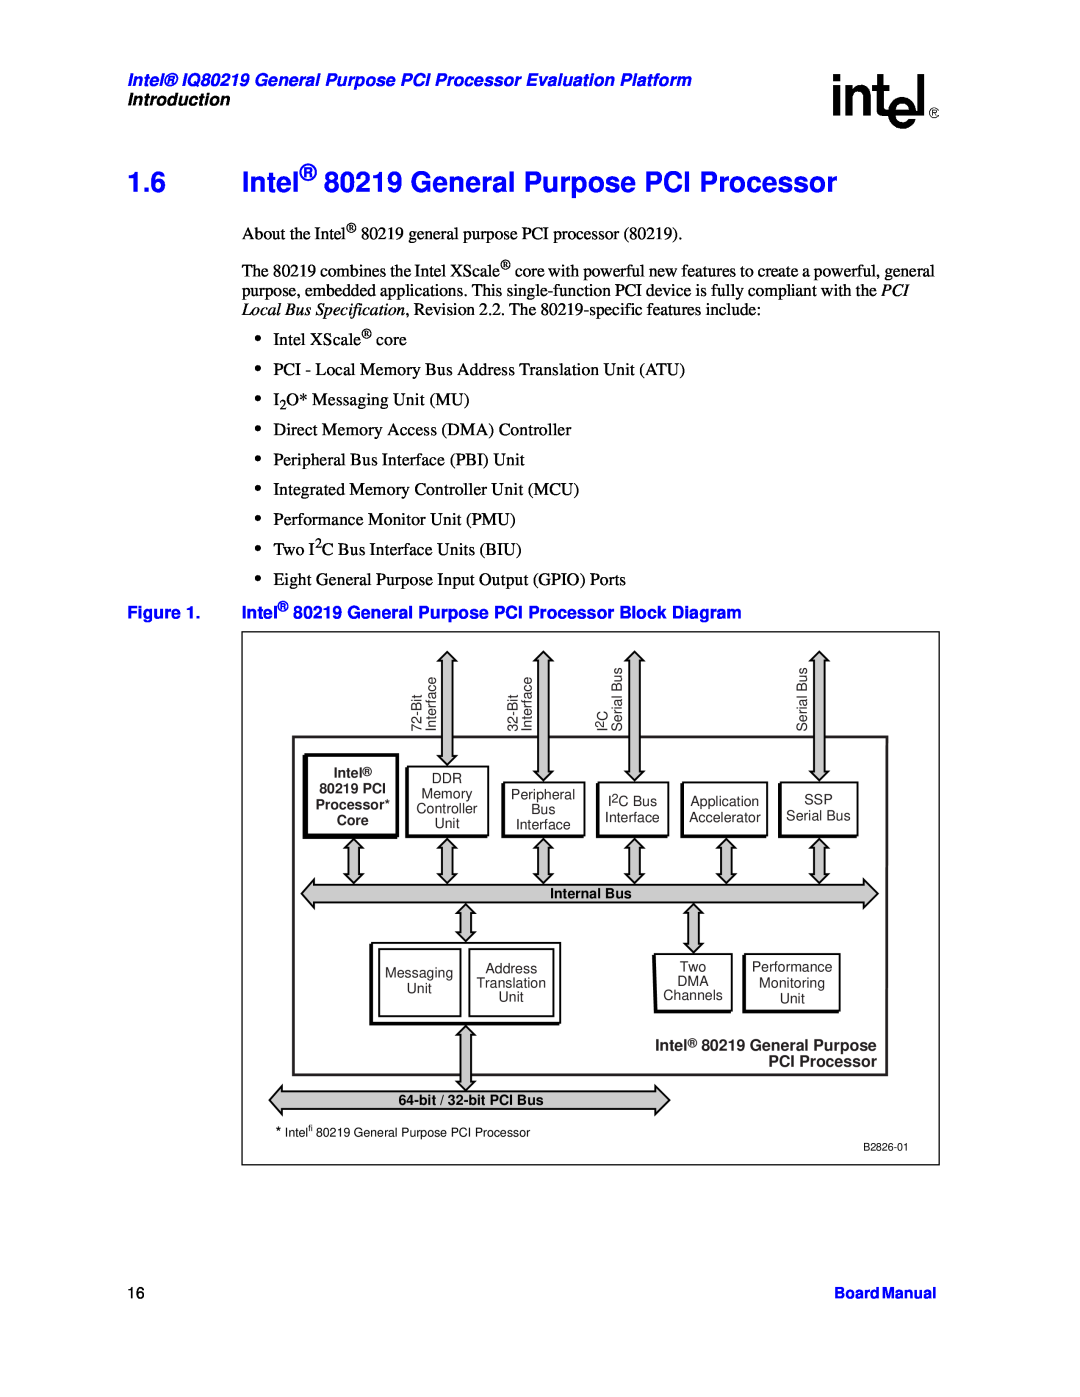 Intel IQ80219 manual Intel 80219 General Purpose PCI Processor Block Diagram, Introduction 